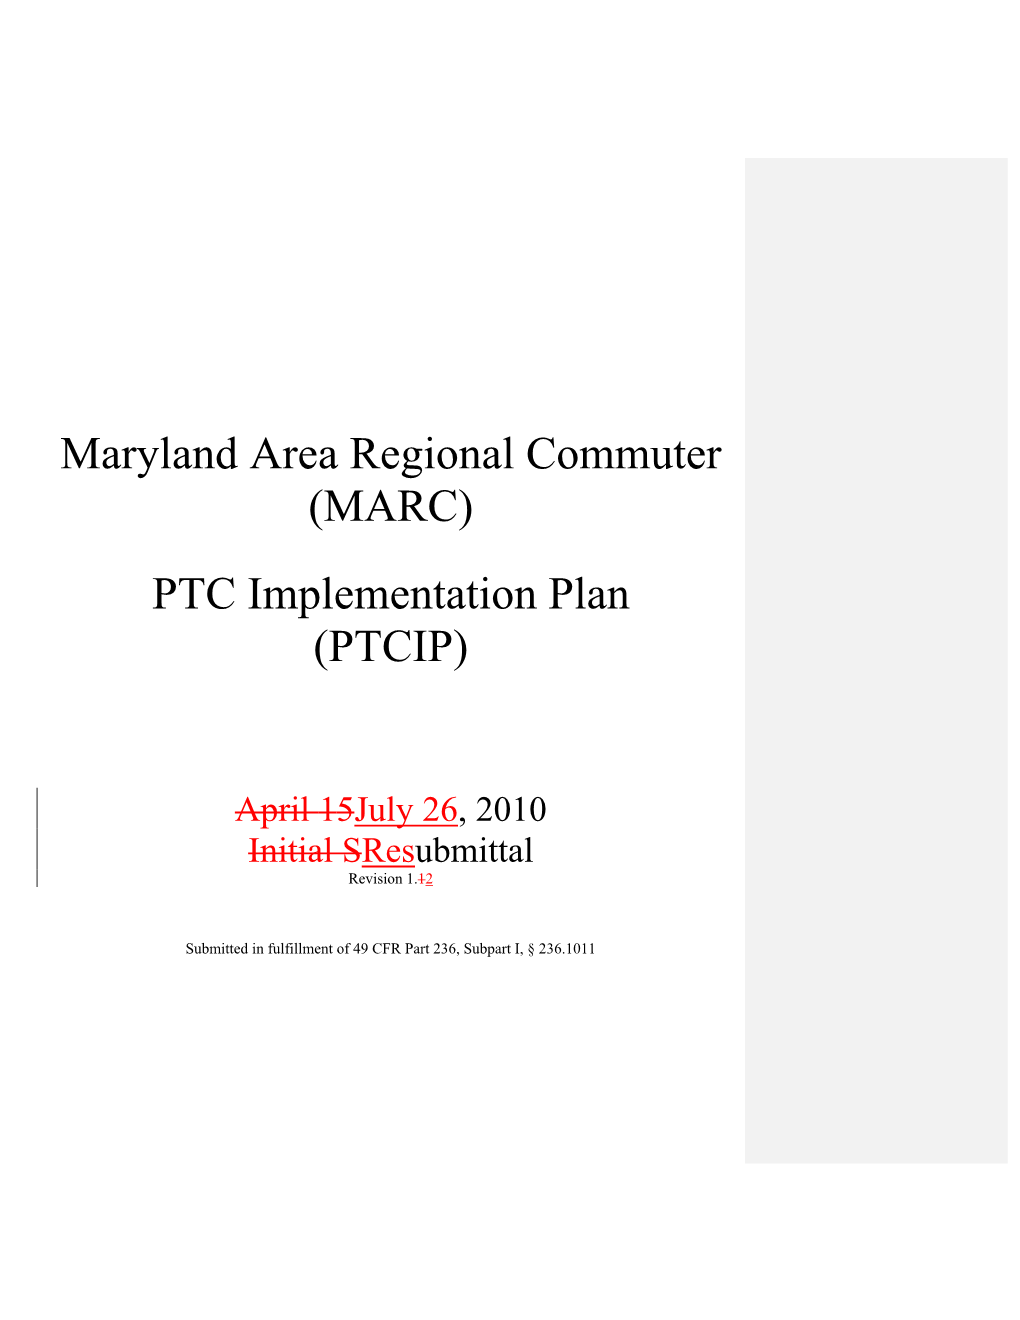 Maryland Area Regional Commuter (MARC) PTC